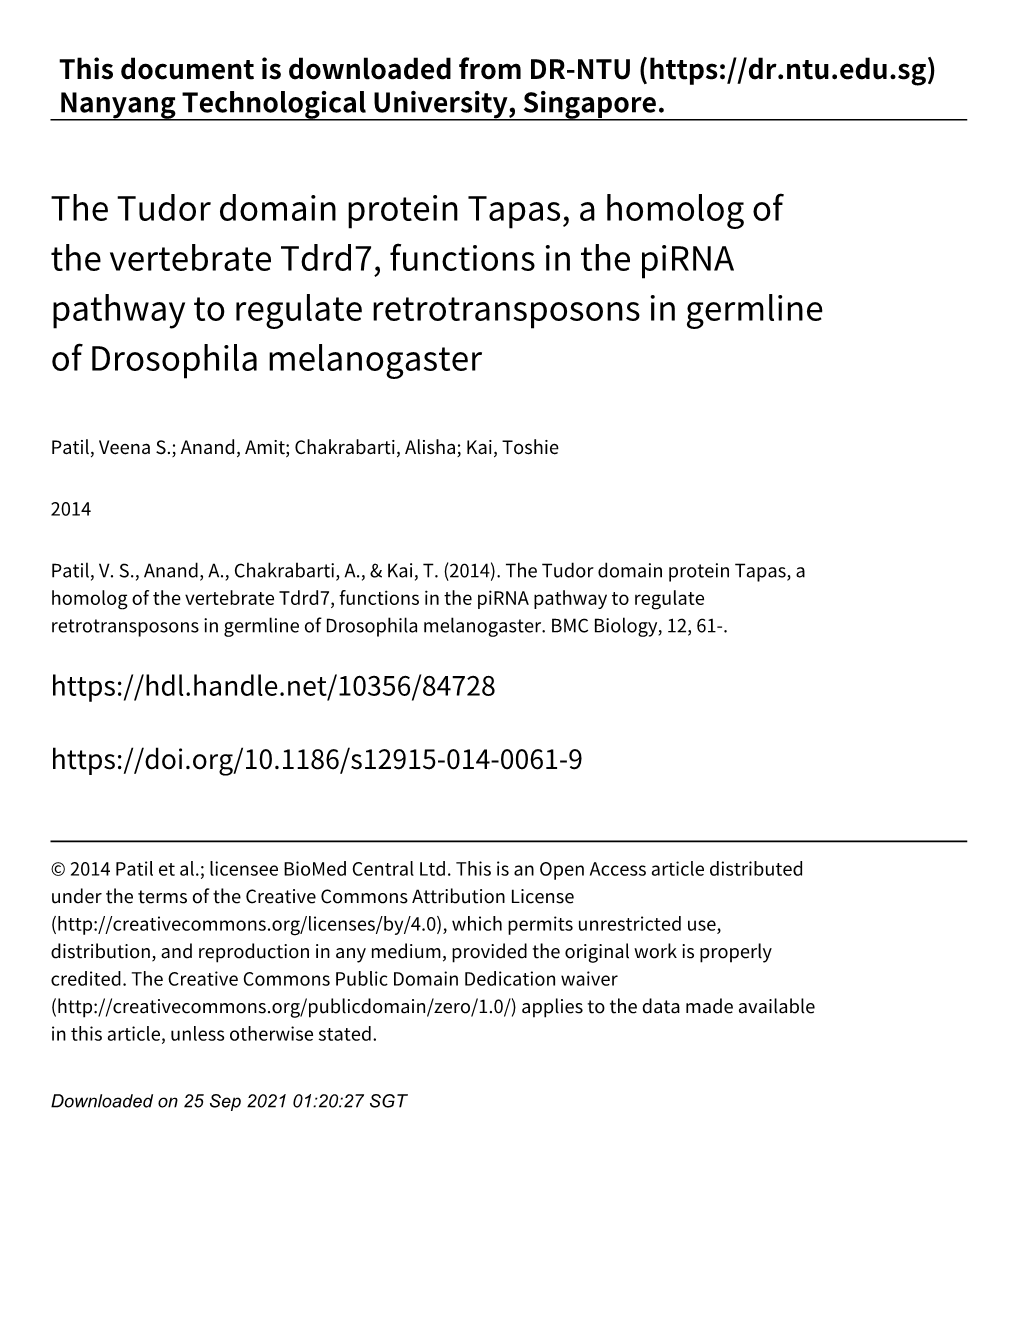 The Tudor Domain Protein Tapas, a Homolog of the Vertebrate Tdrd7, Functions in the Pirna Pathway to Regulate Retrotransposons in Germline of Drosophila Melanogaster